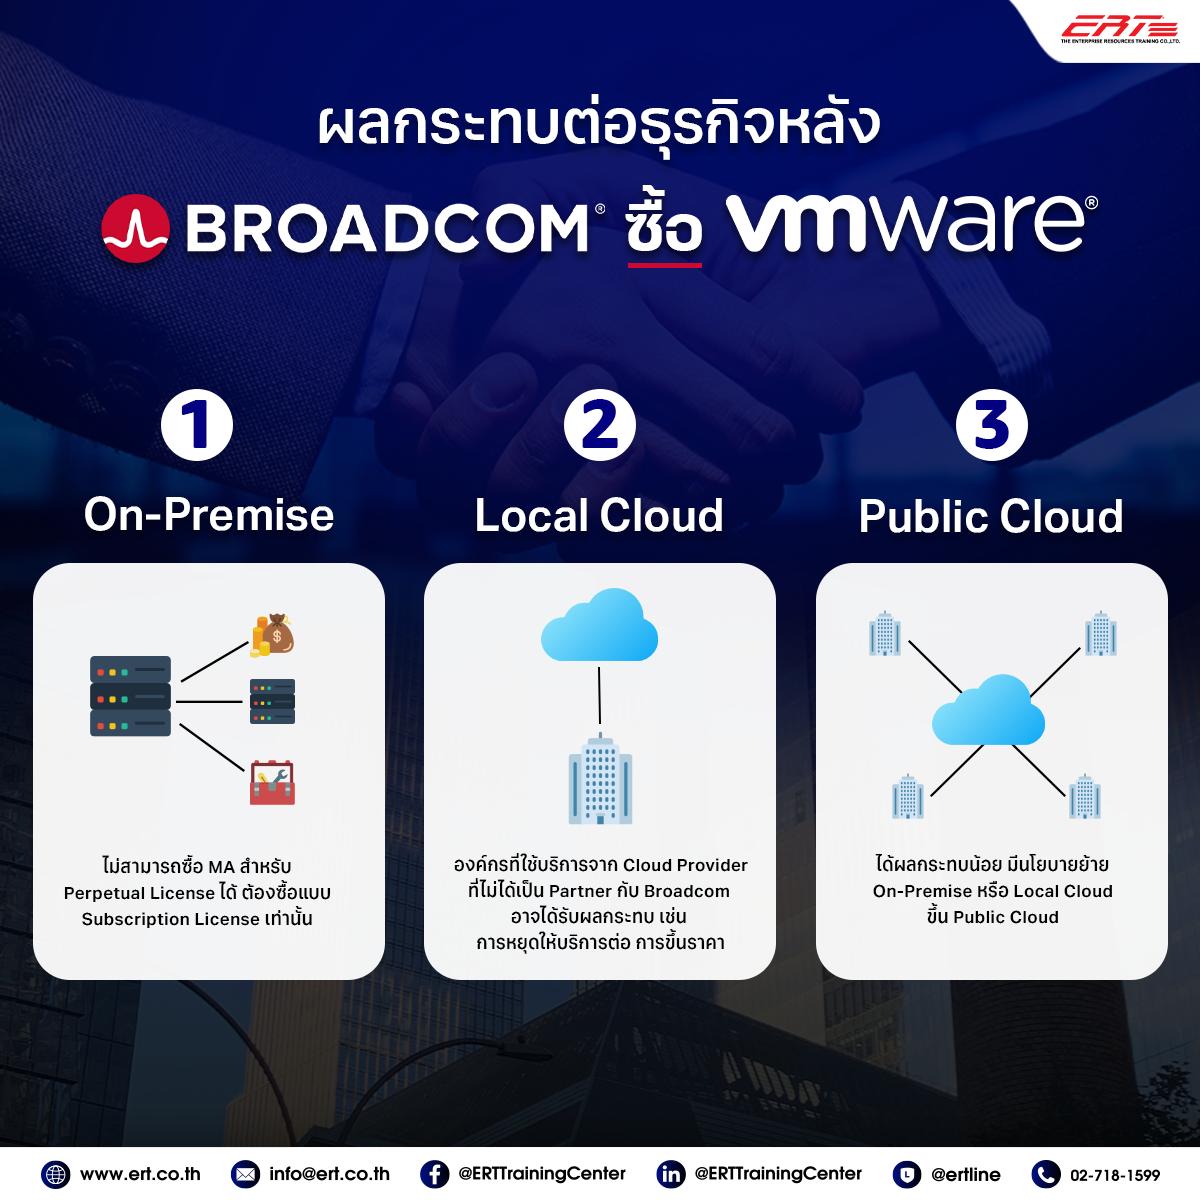 Broadcom ซื้อ VMware